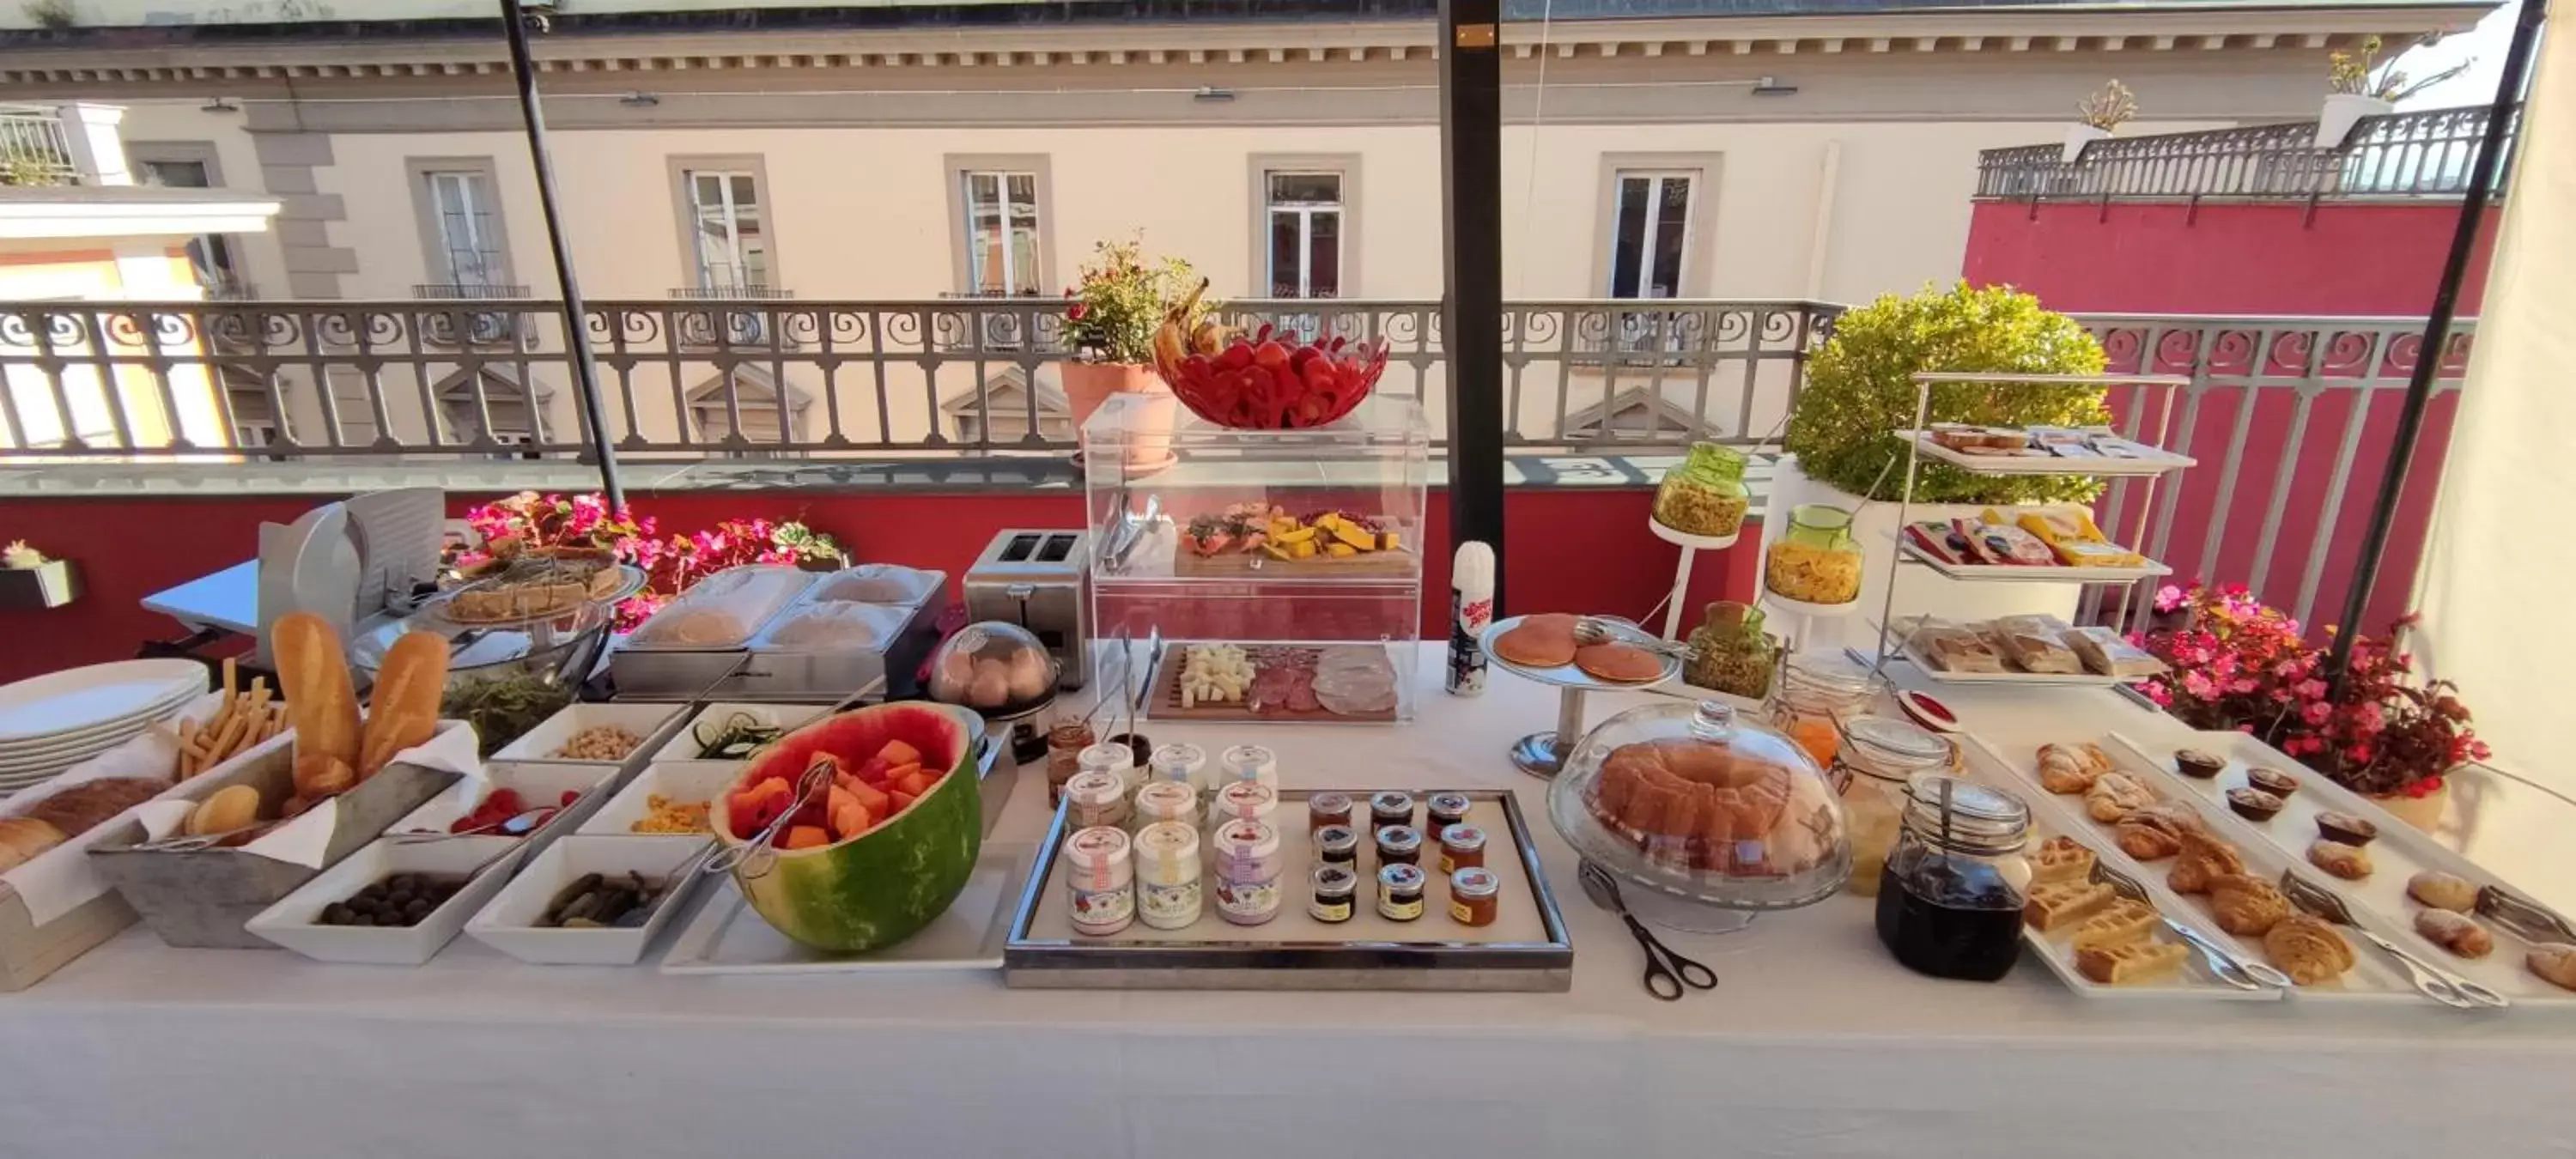 Buffet breakfast in La Ciliegina Lifestyle Hotel